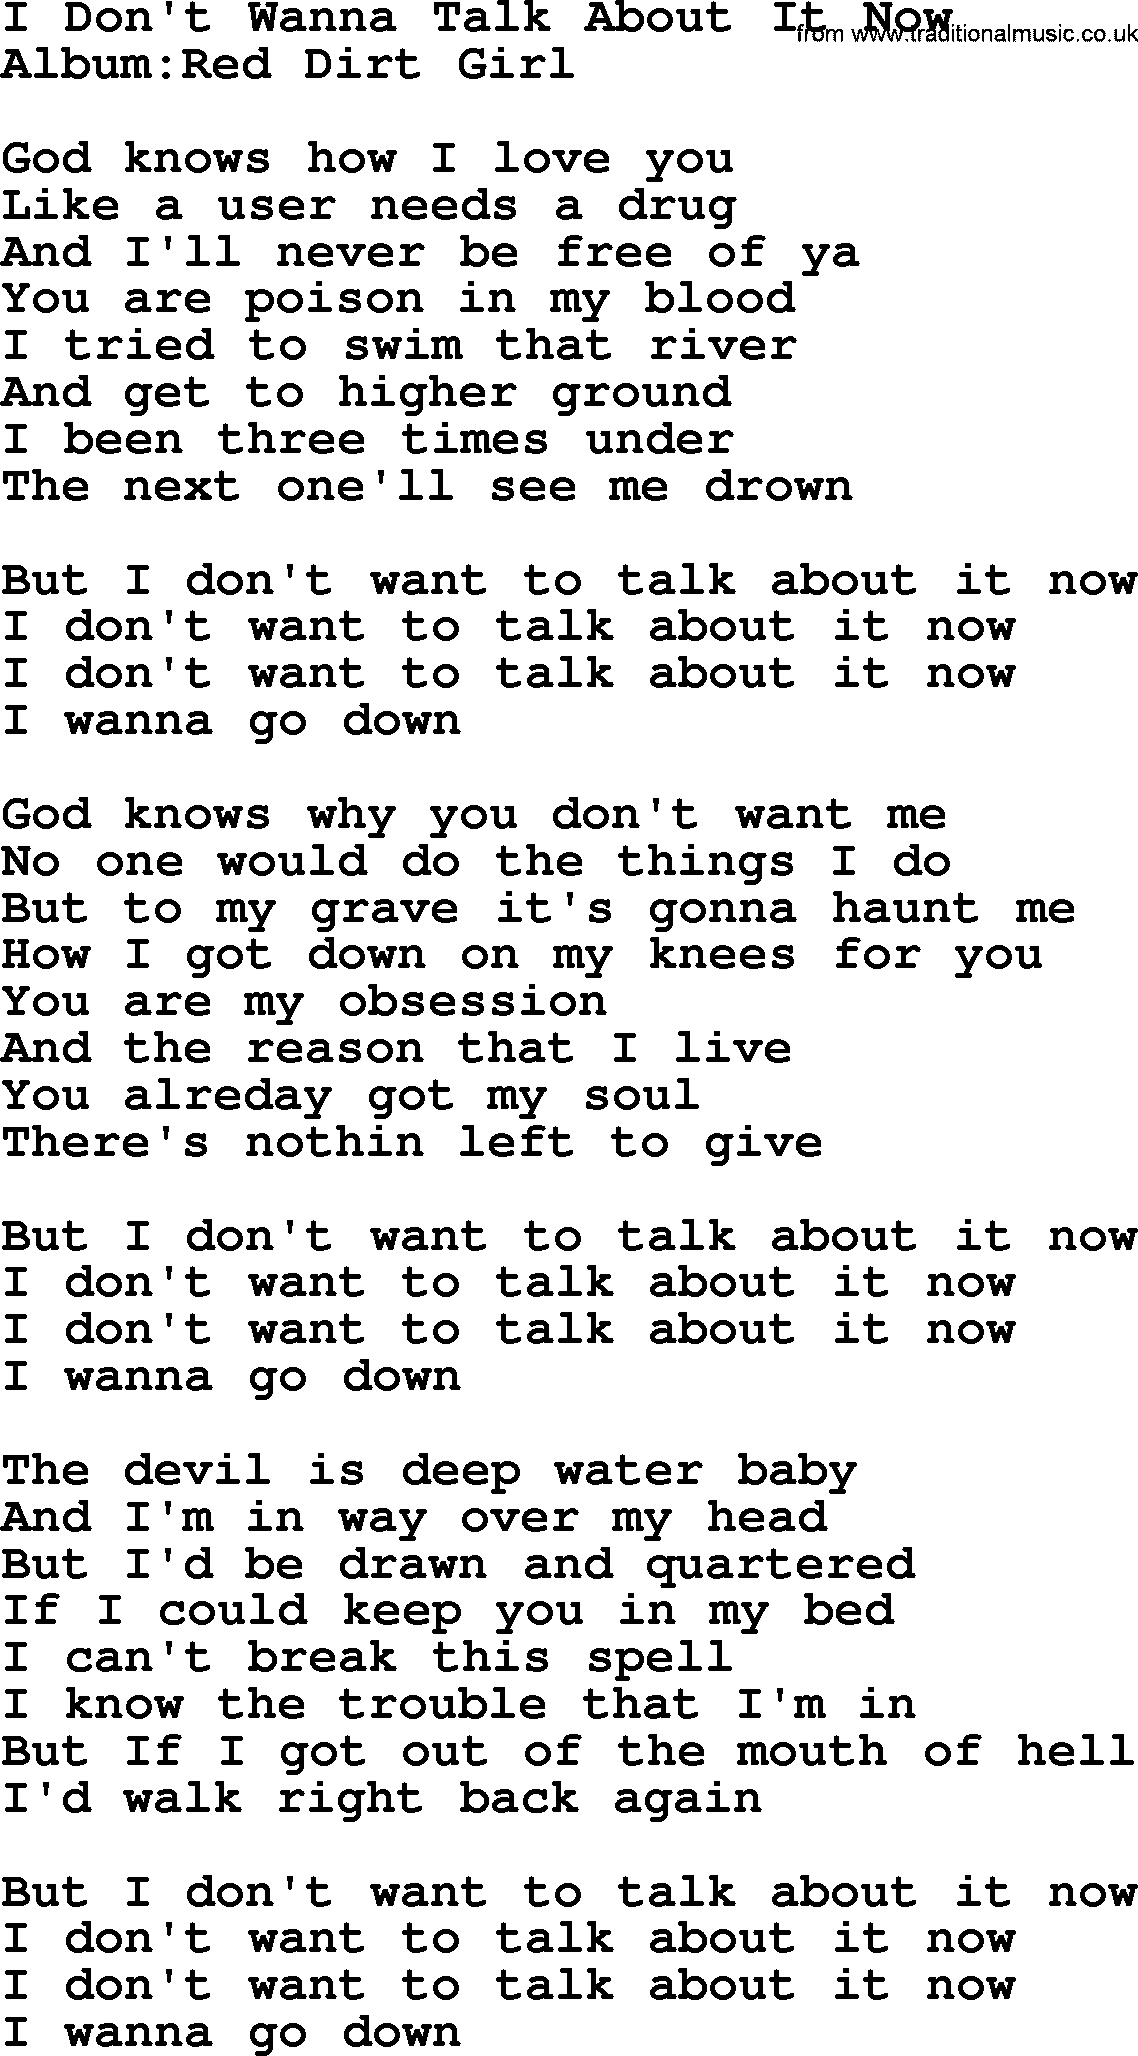 Emmylou Harris song: I Don't Wanna Talk About It Now lyrics